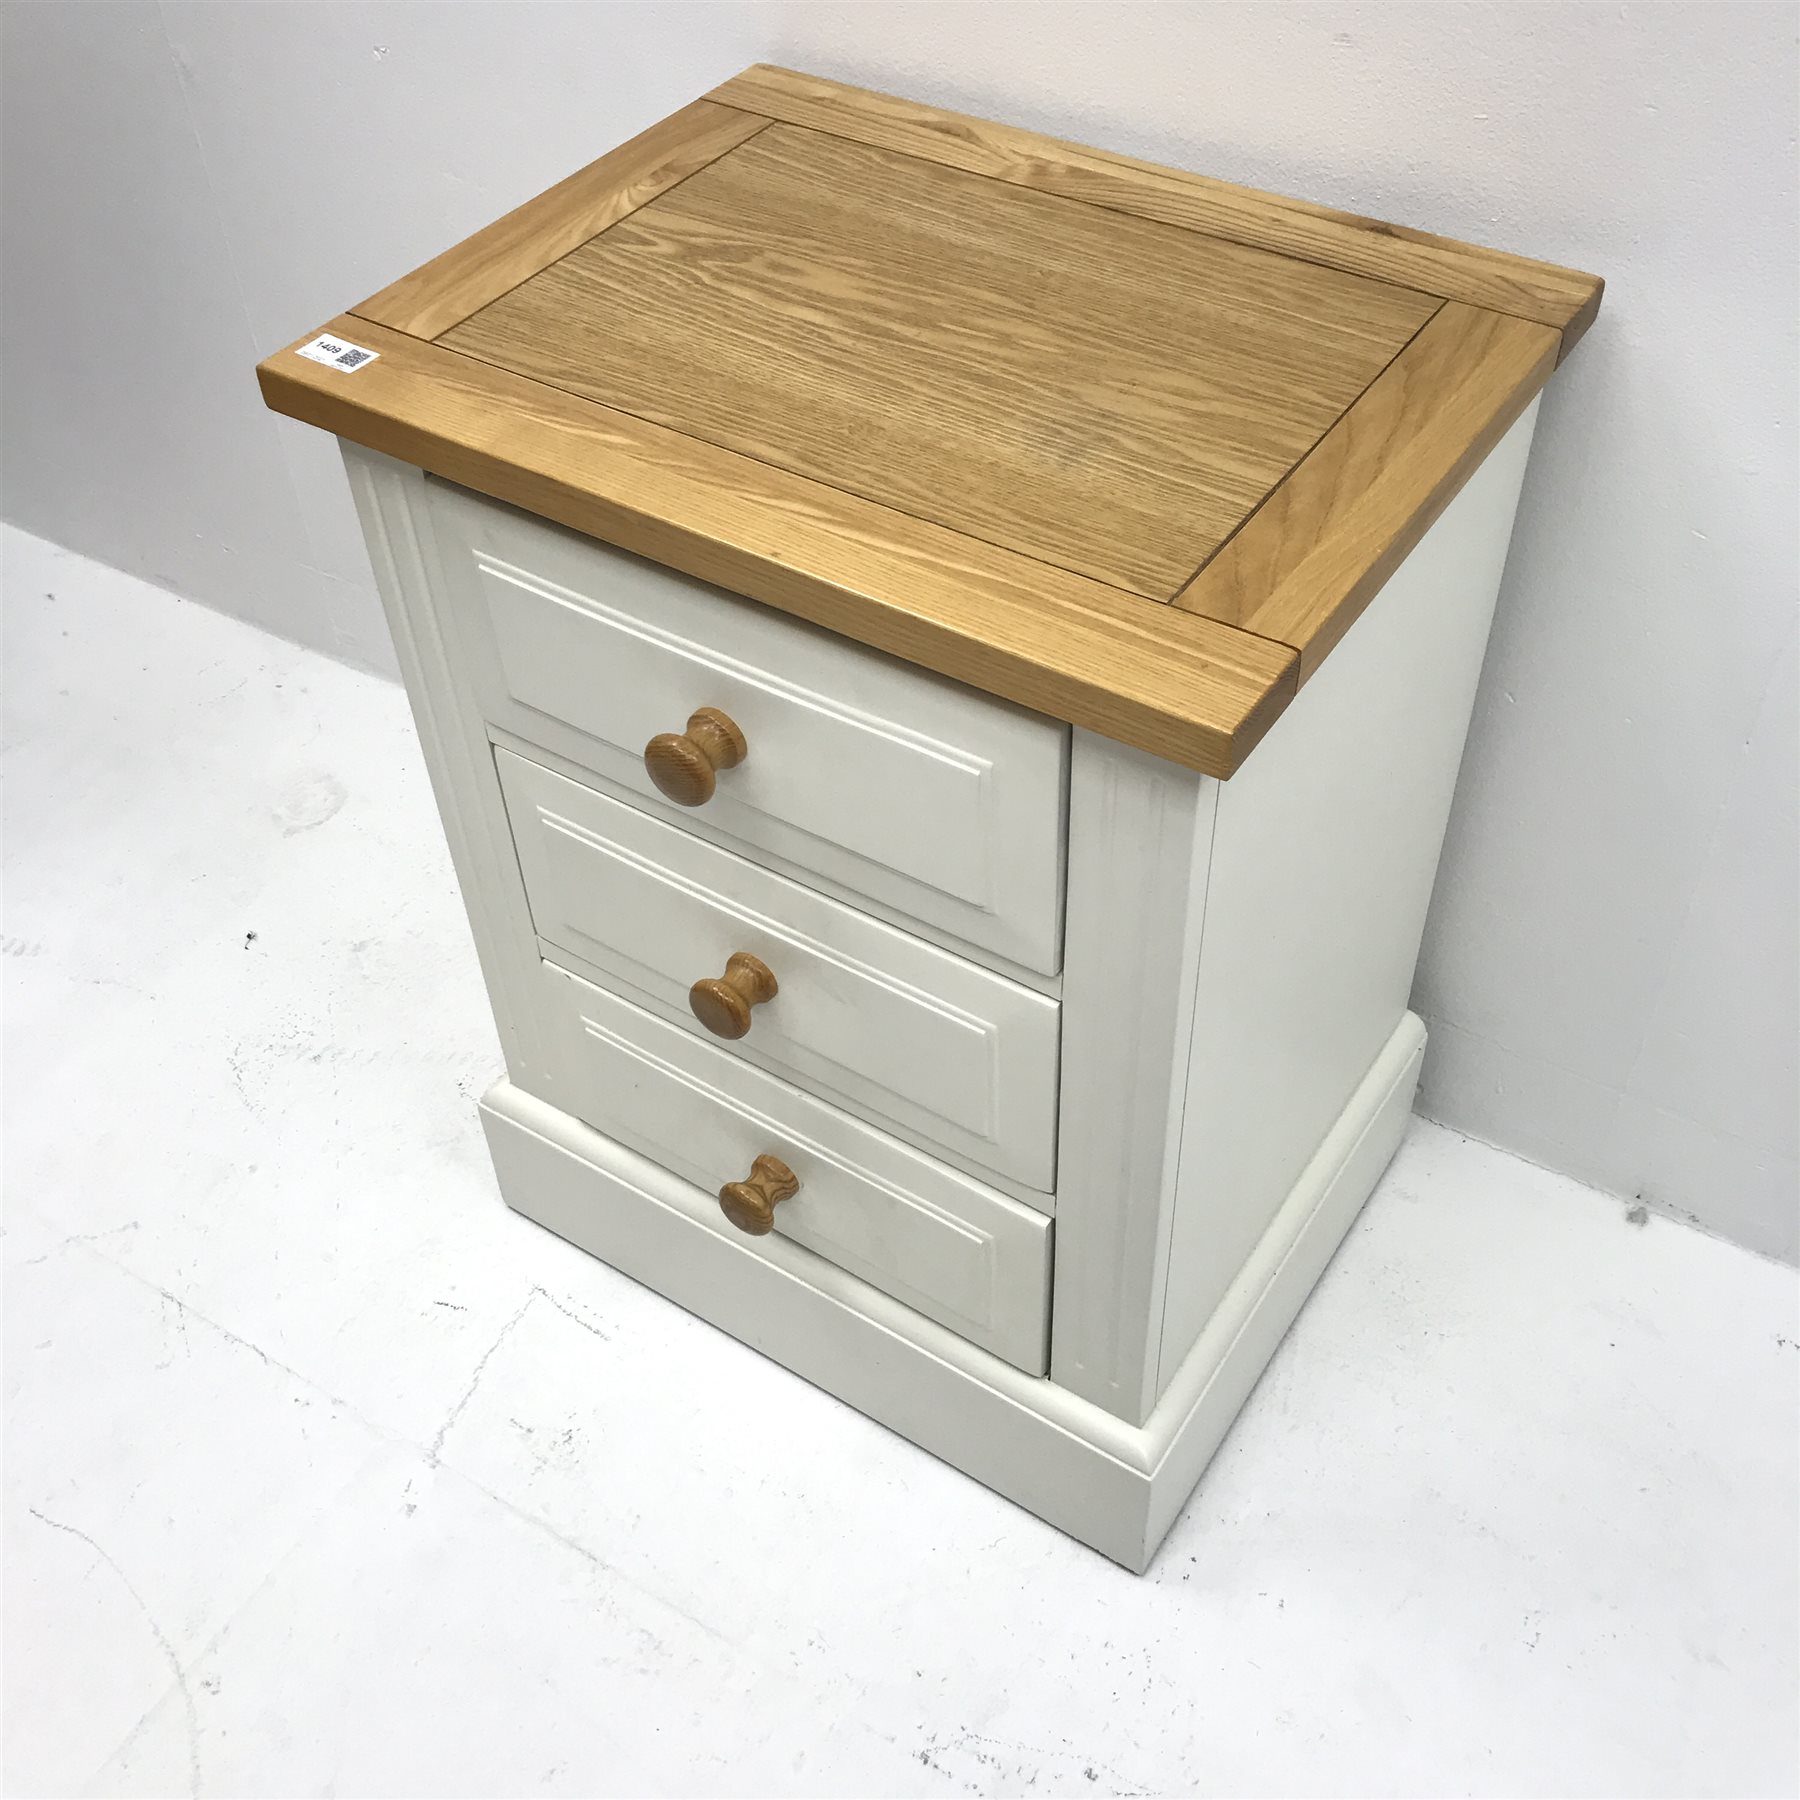 Oak and white finish lamp chest, three drawers, platform base, W53cm, H69cm, D41cm - Image 3 of 3